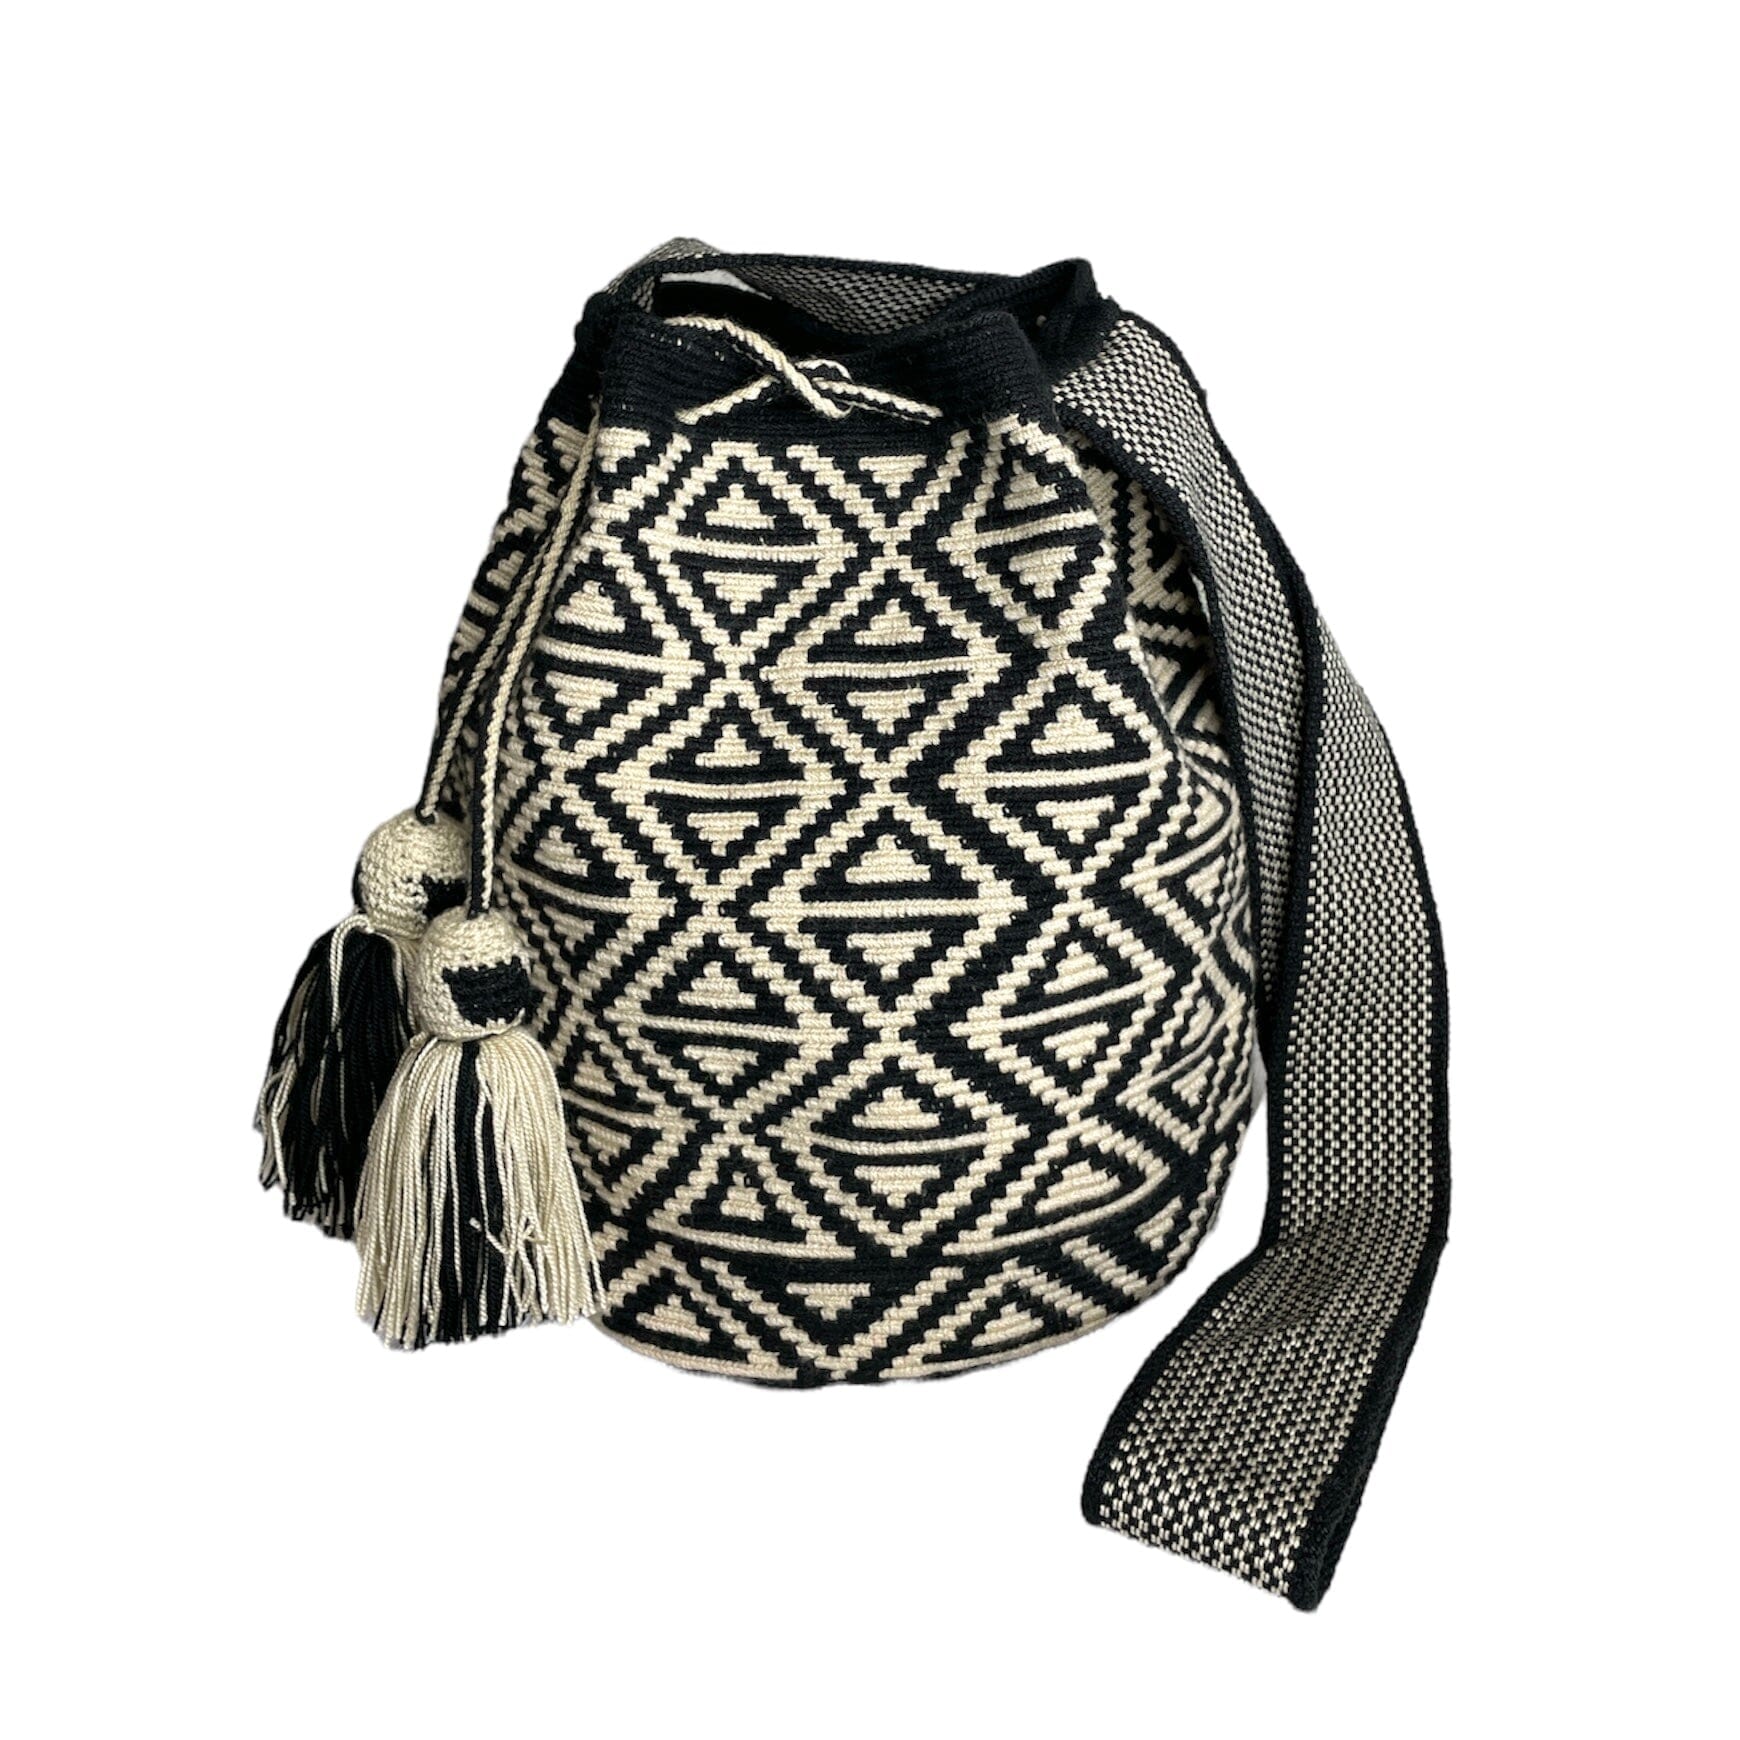 Premium Crochet Bag | Single Thread Hand-Crocheted Bag | Fashion Bag ...